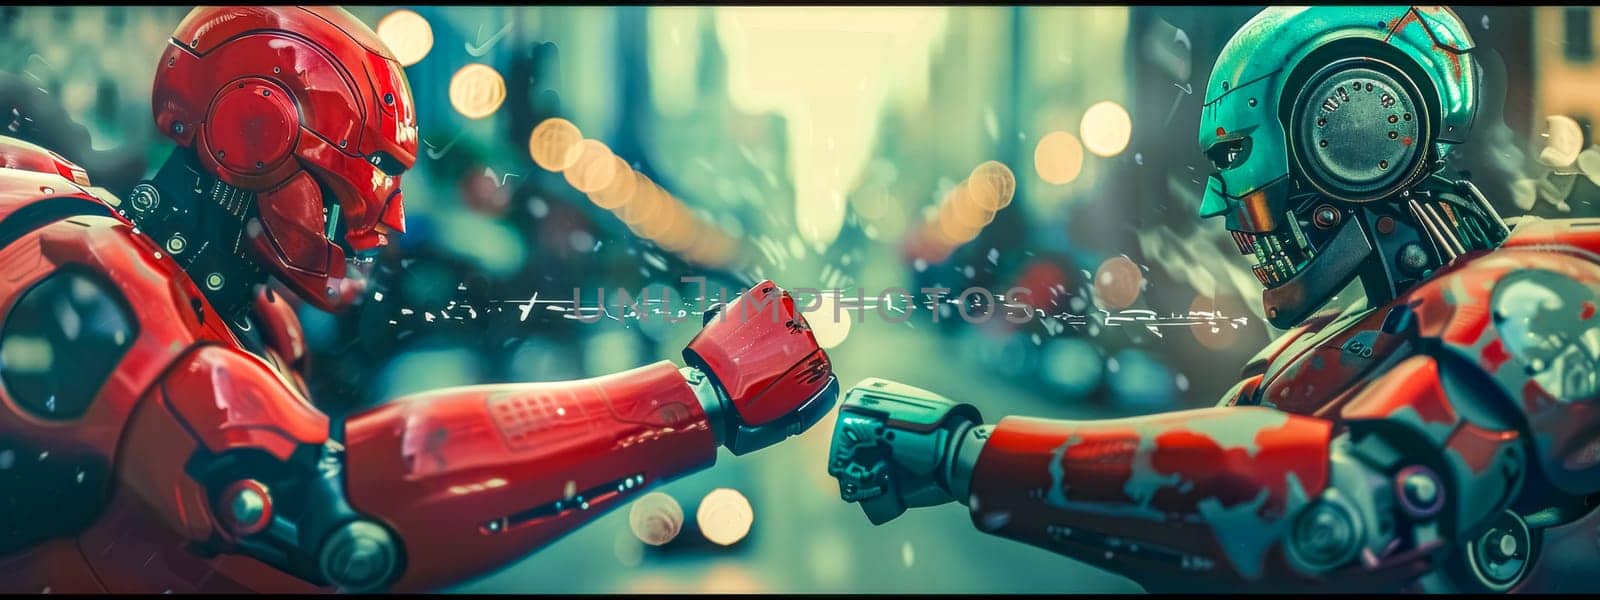 Futuristic robot arm wrestling showdown by Edophoto